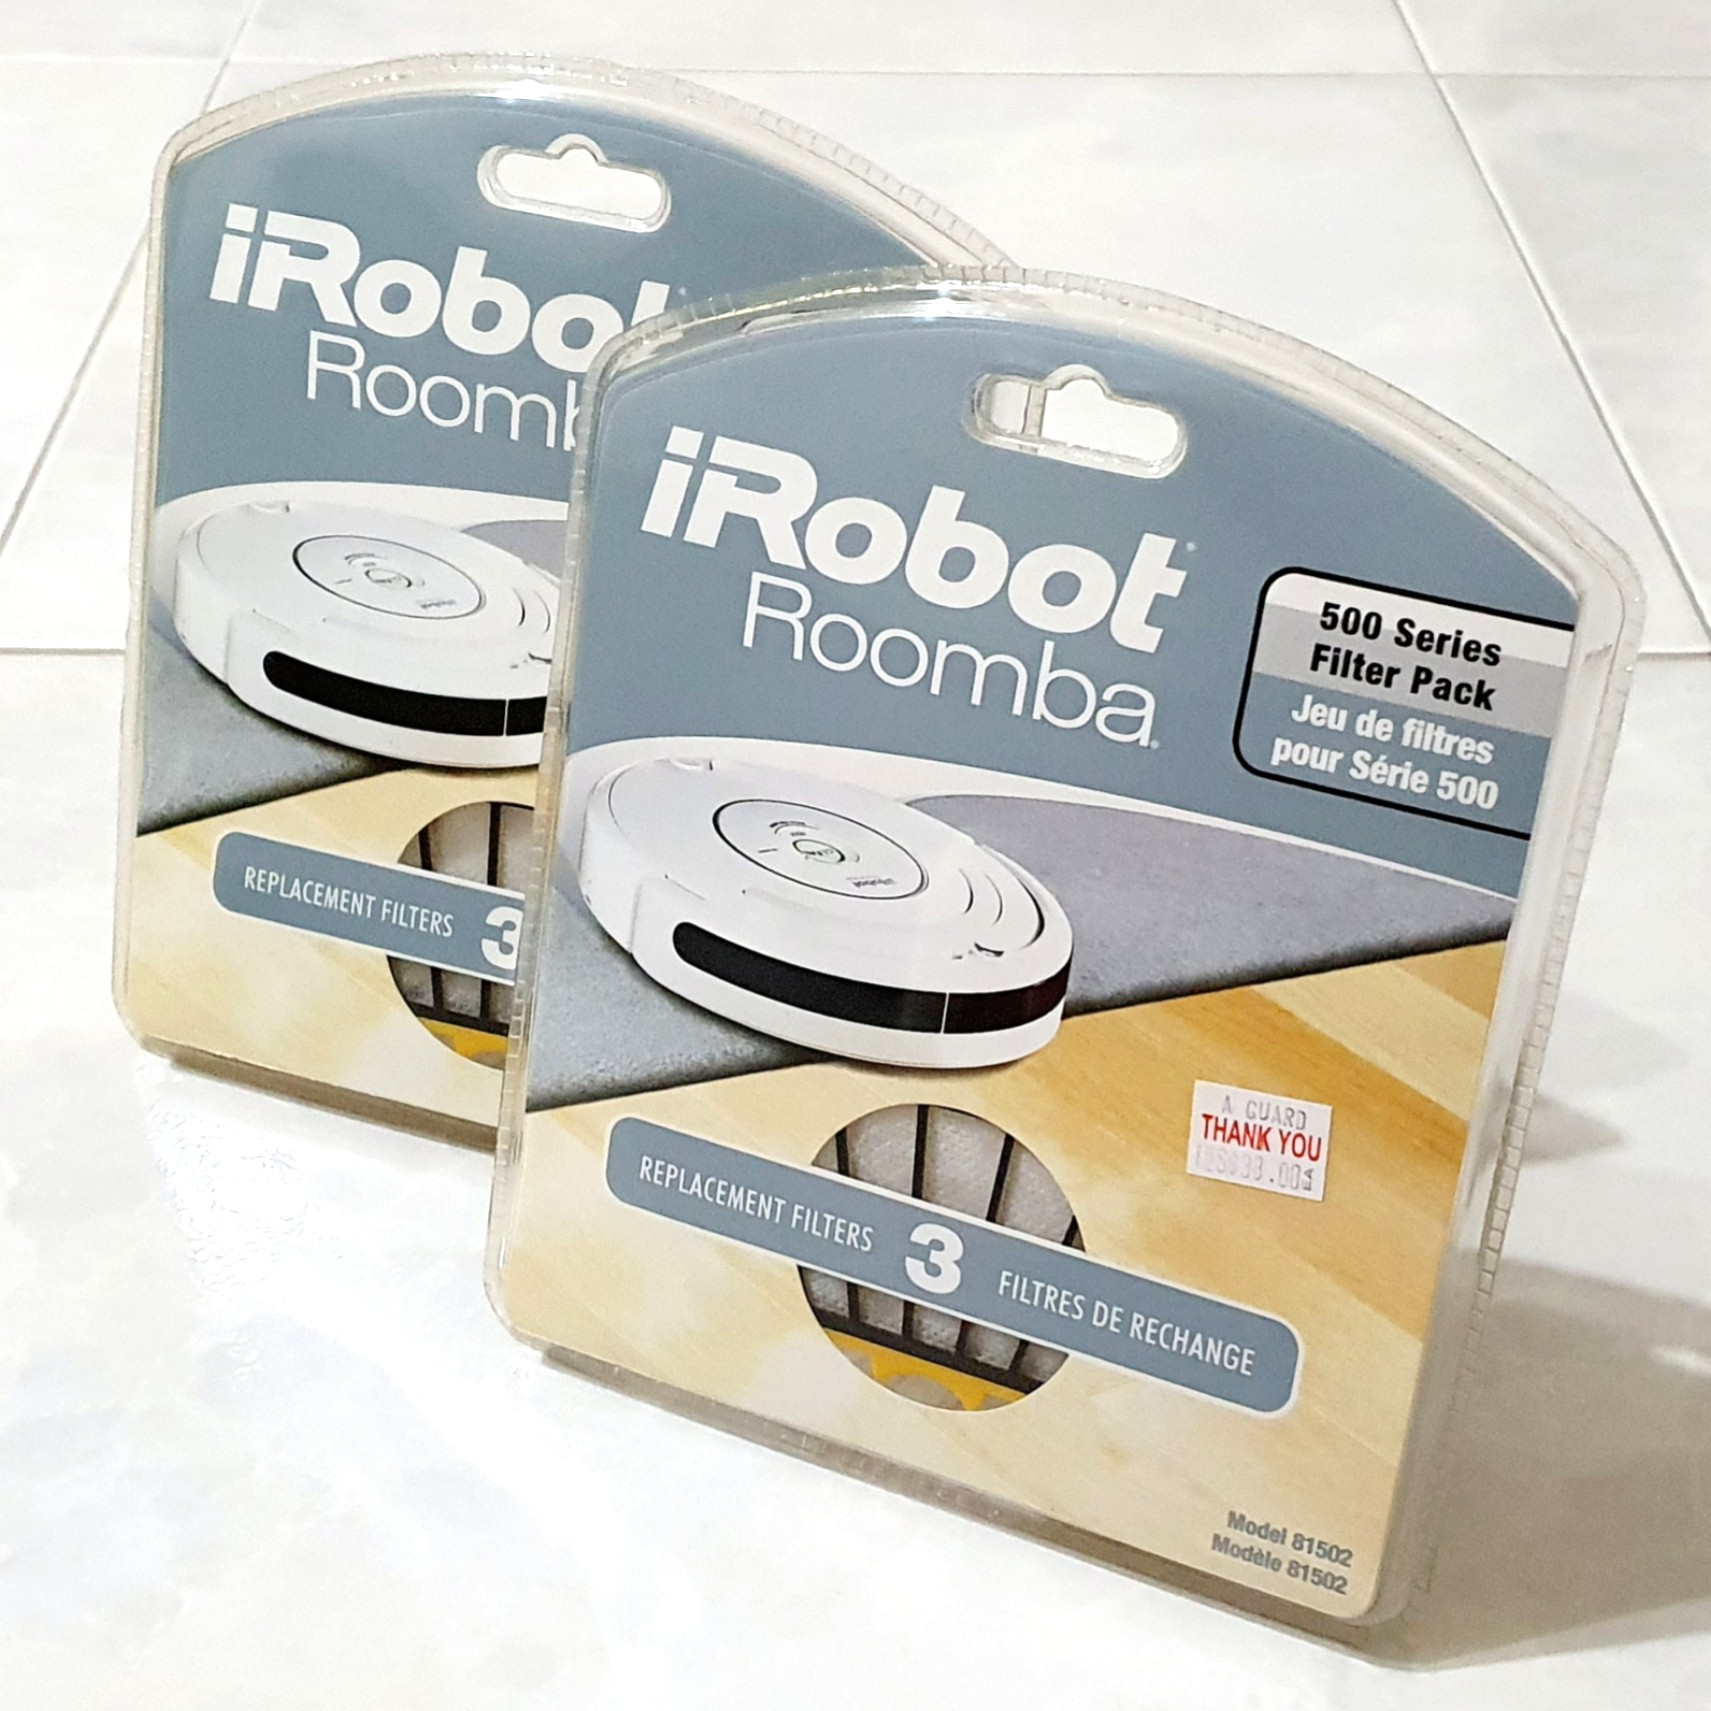 iRobot Roomba replacement filters model 81502 500 series filter